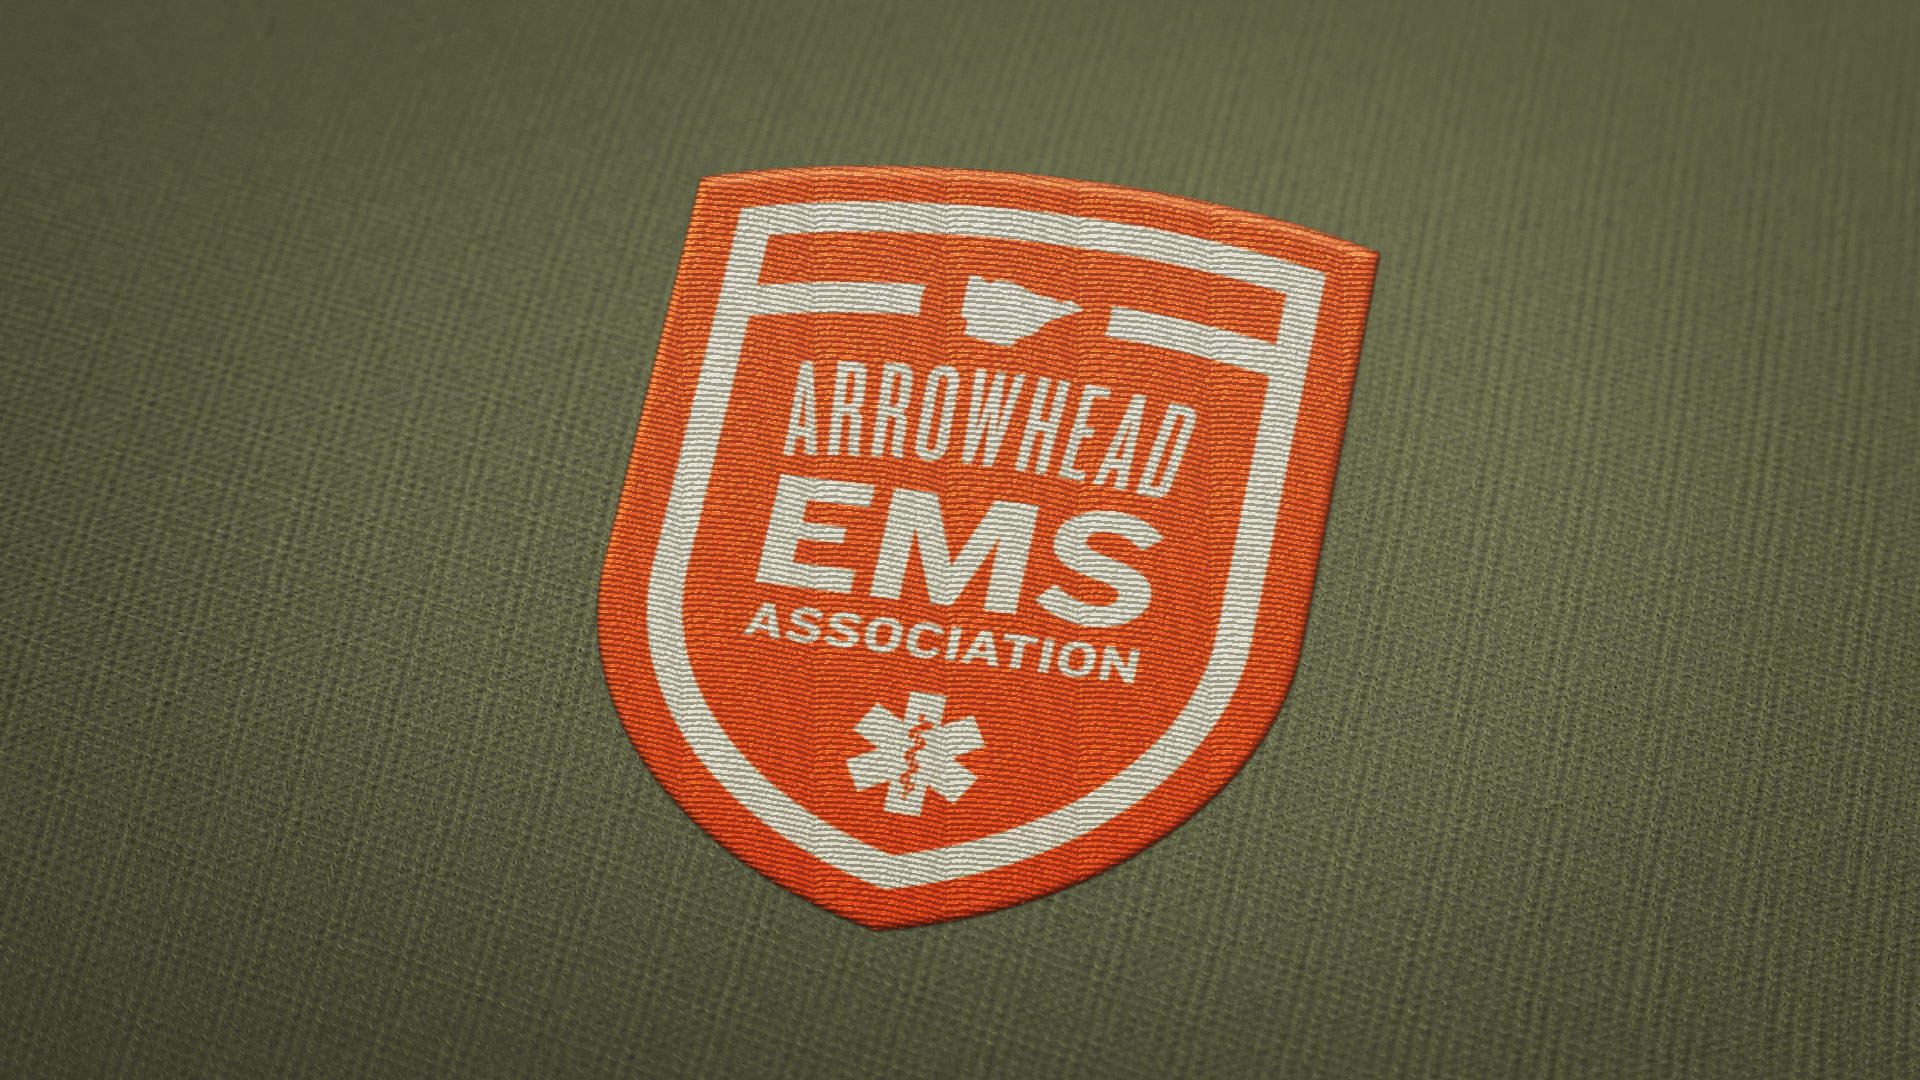 arrowhead ems patch